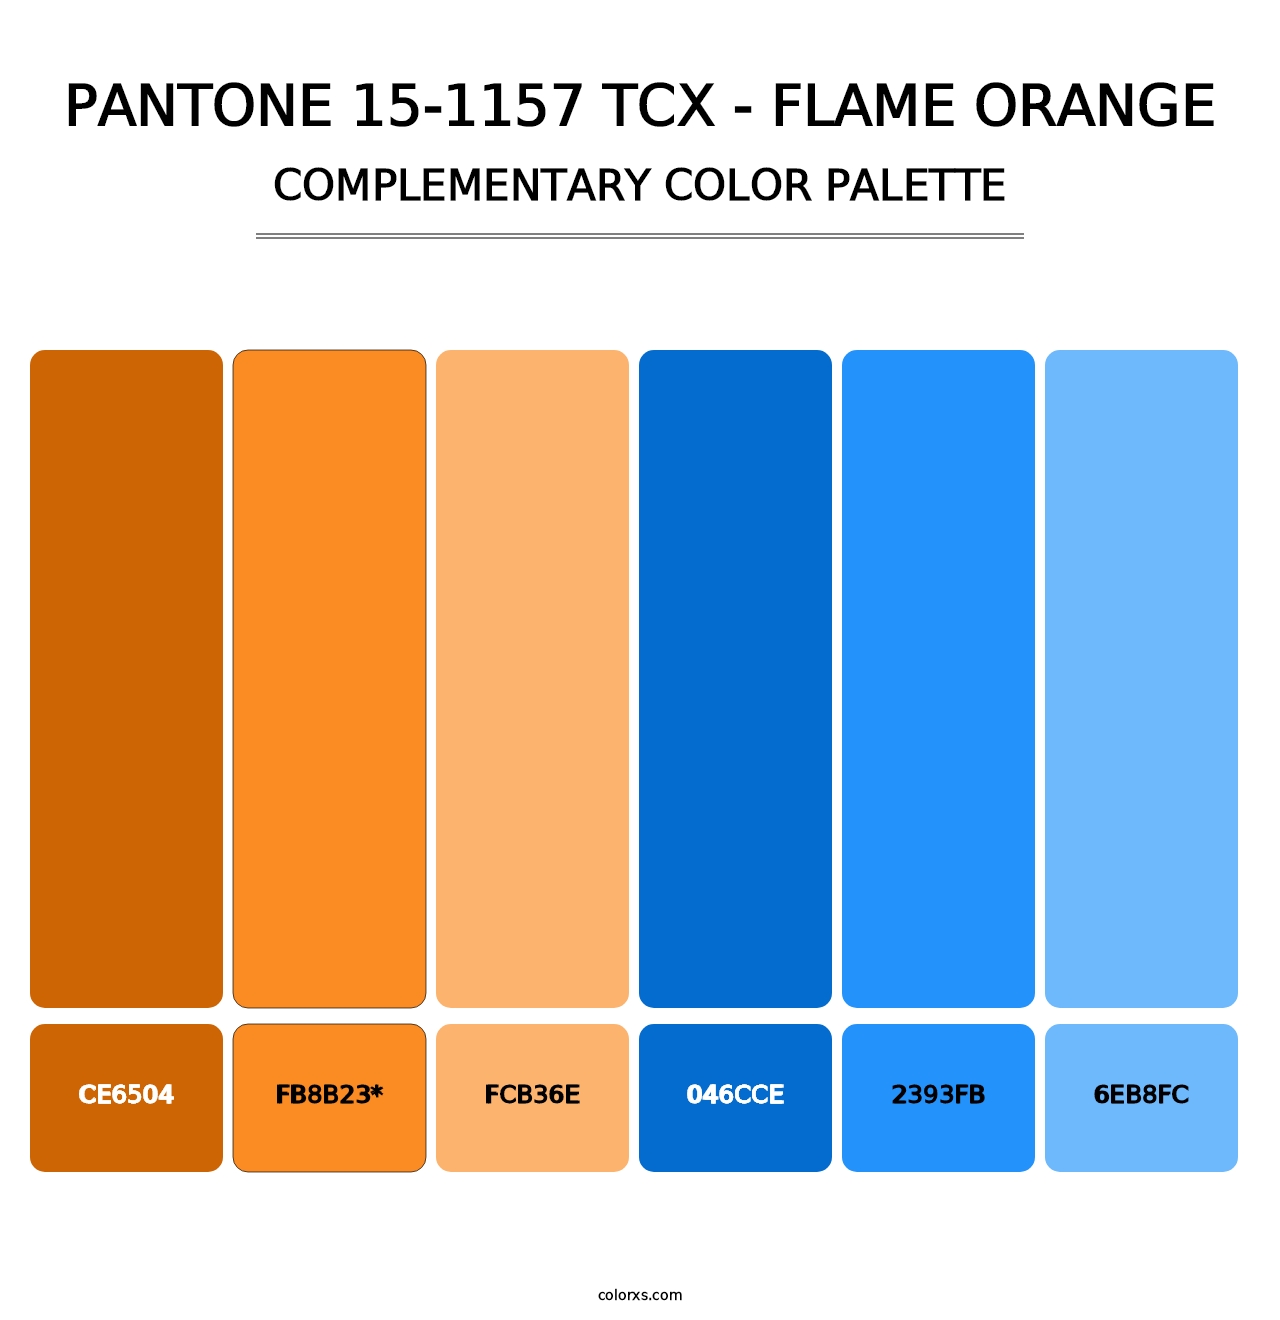 PANTONE 15-1157 TCX - Flame Orange - Complementary Color Palette